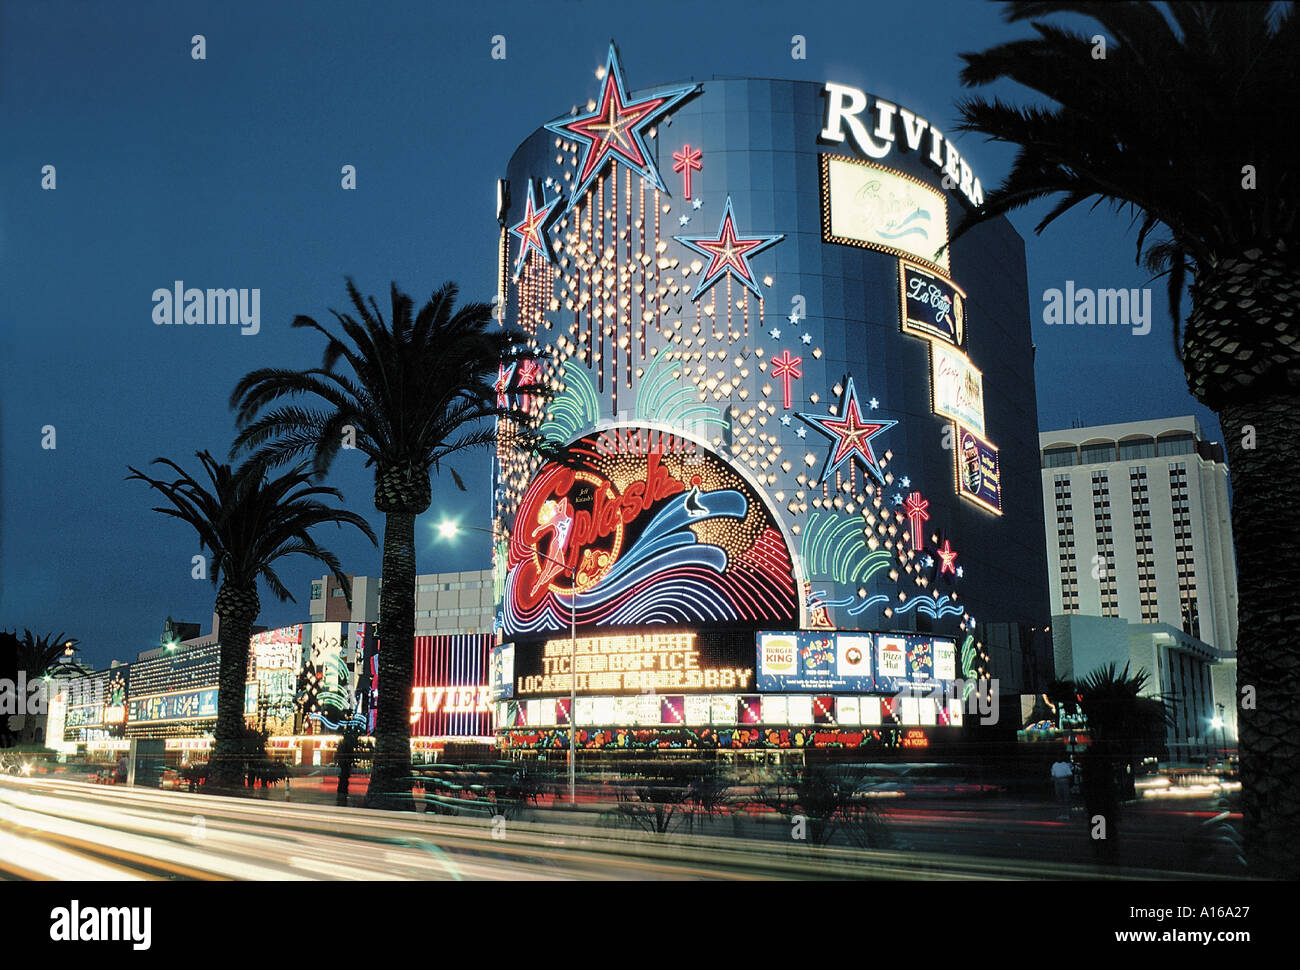 Riviera Hotel and Casino à Las Vegas au Nevada Banque D'Images